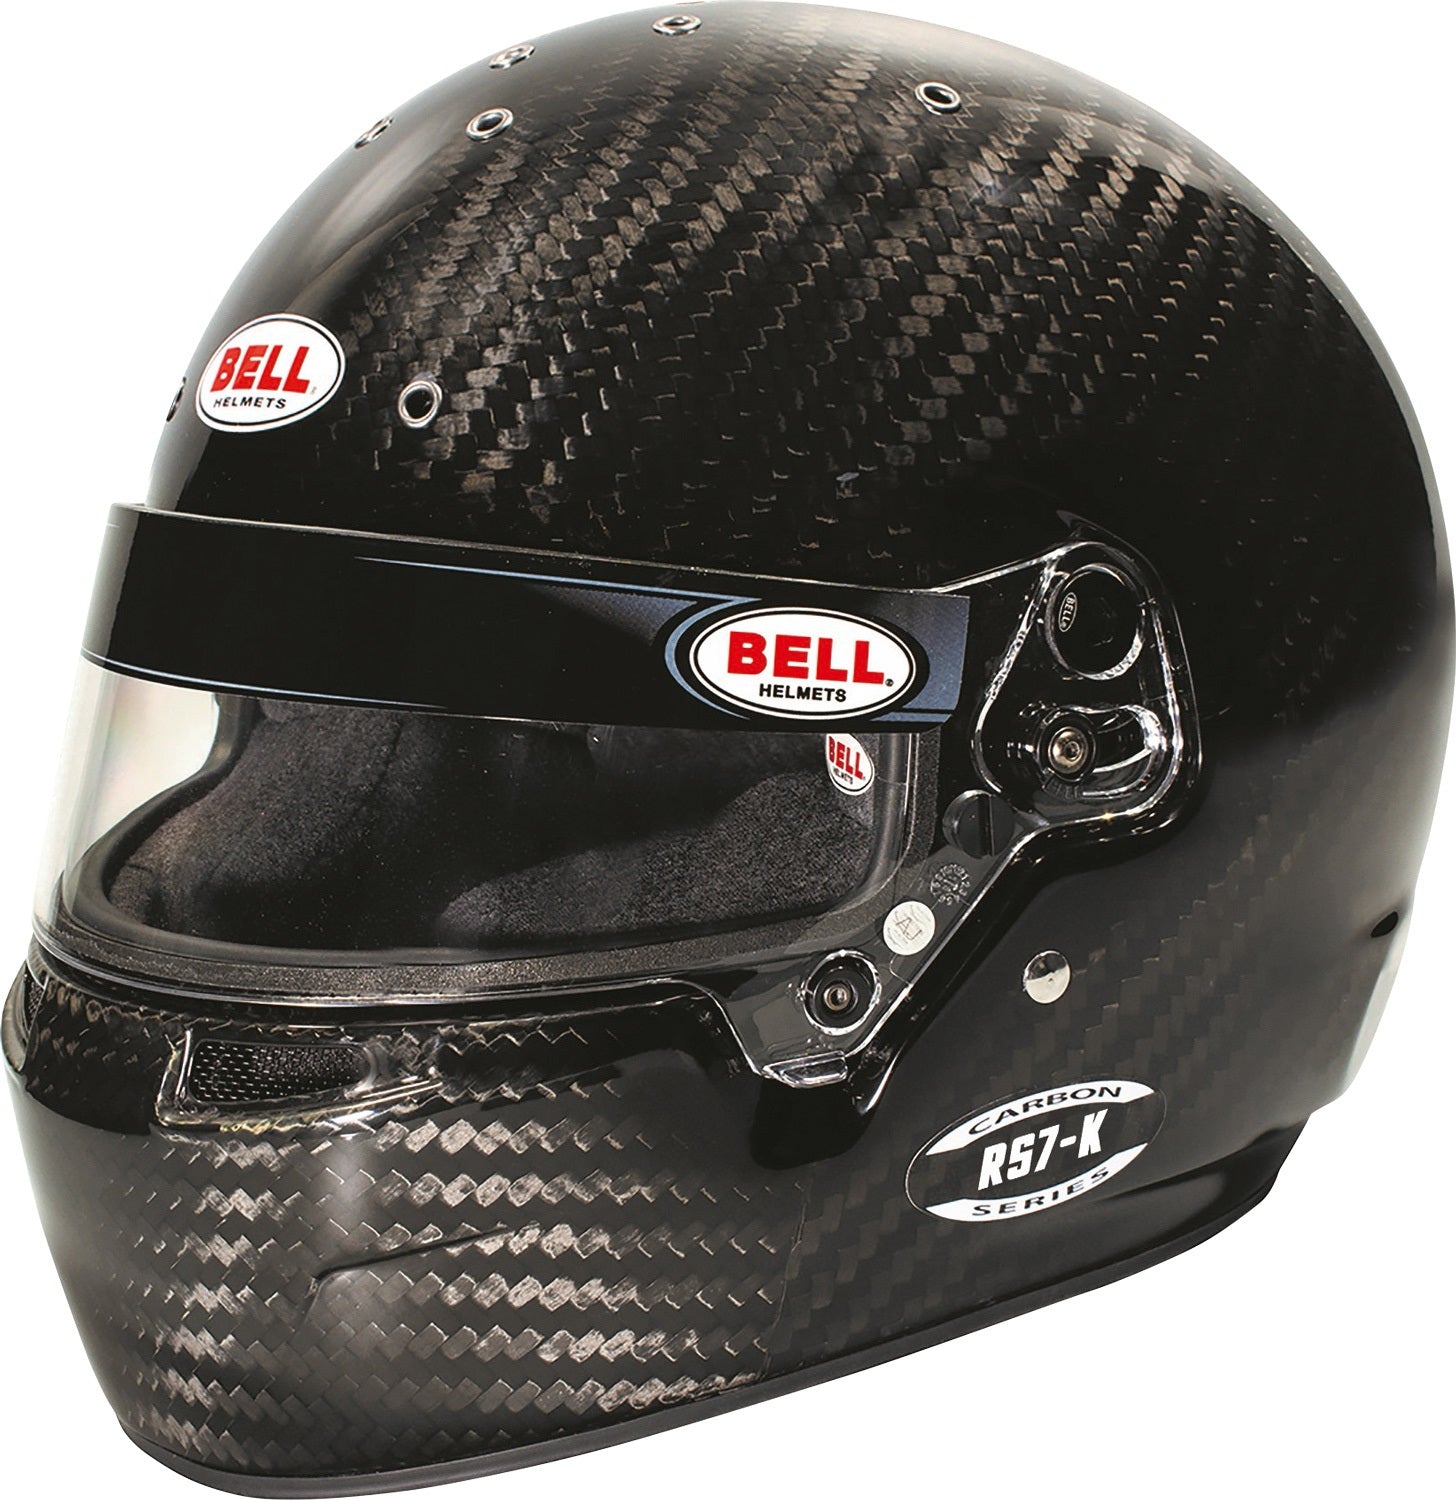 Bell RS7-K Carbon Helmet